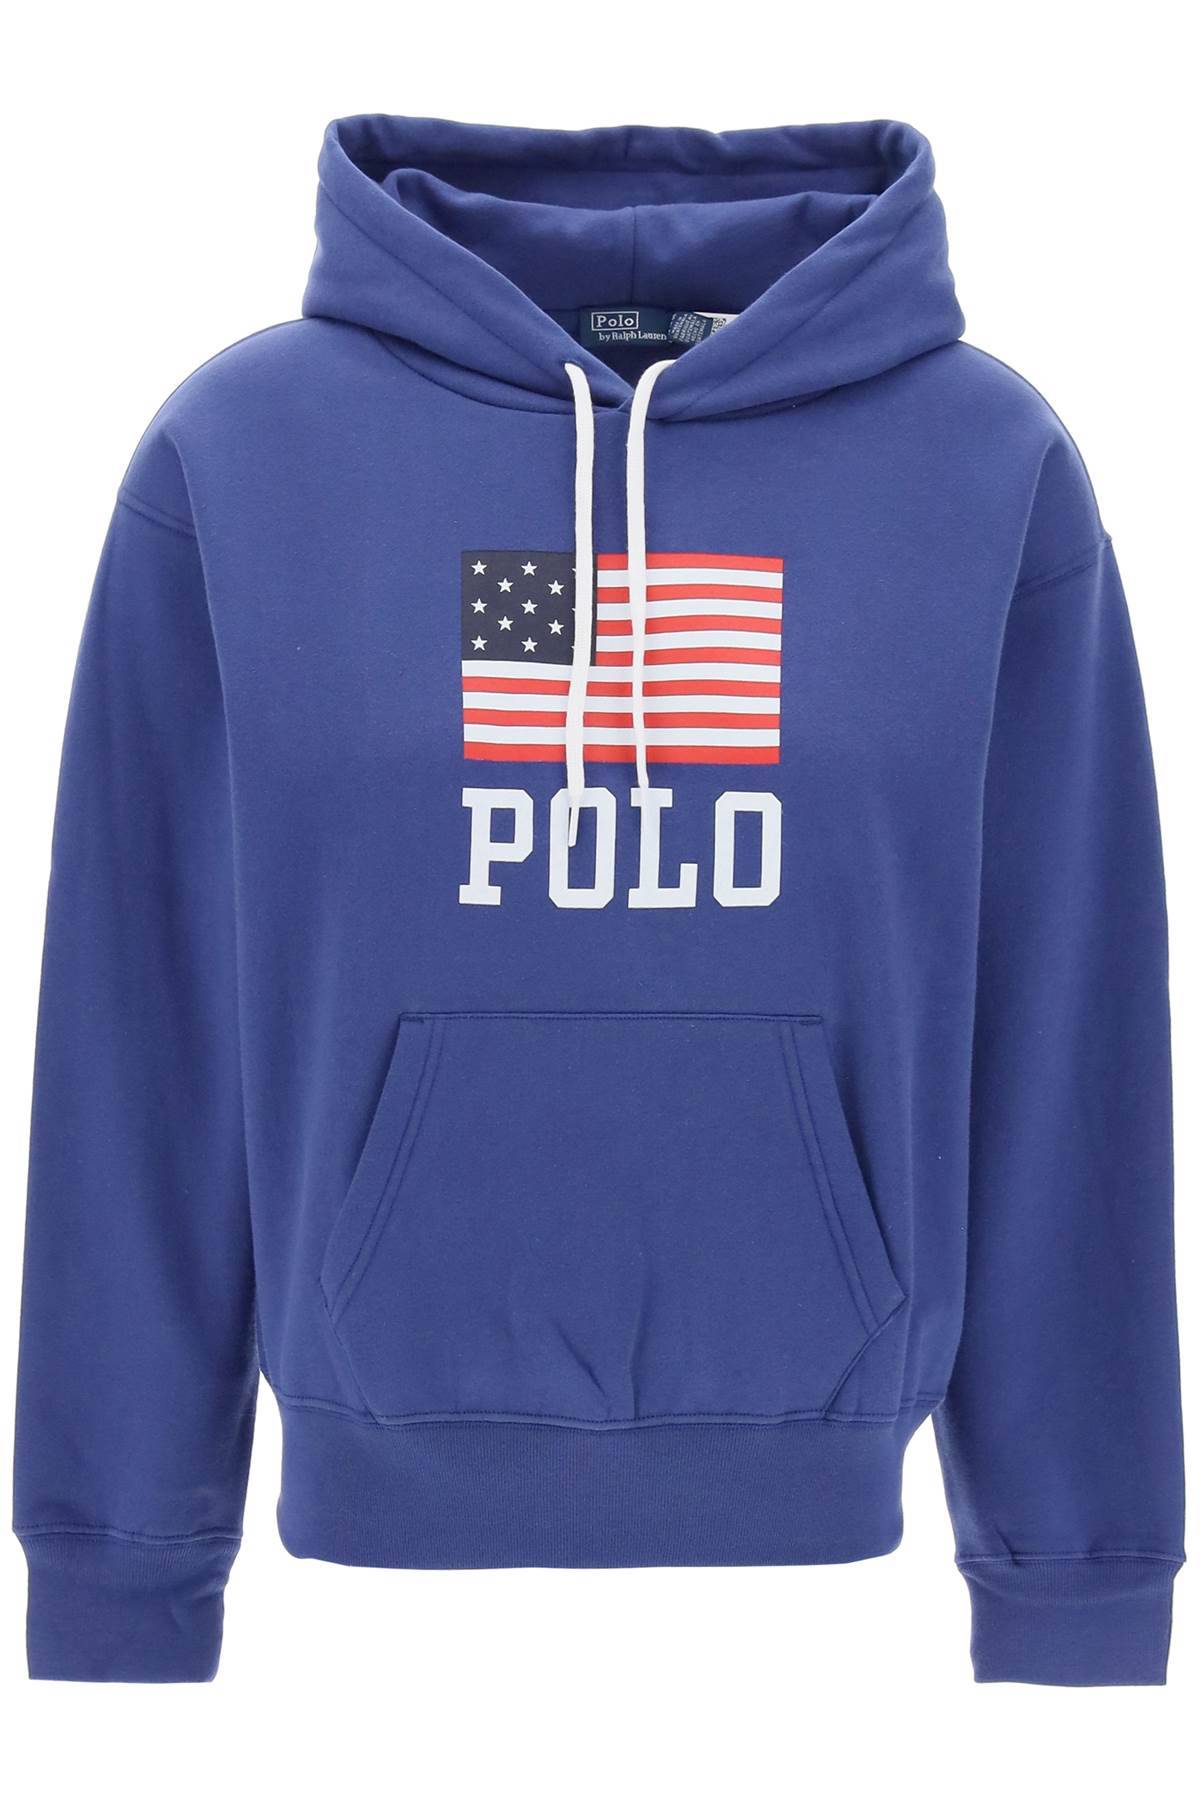 Polo Ralph Lauren POLO RALPH LAUREN hooded sweatshirt with flag print